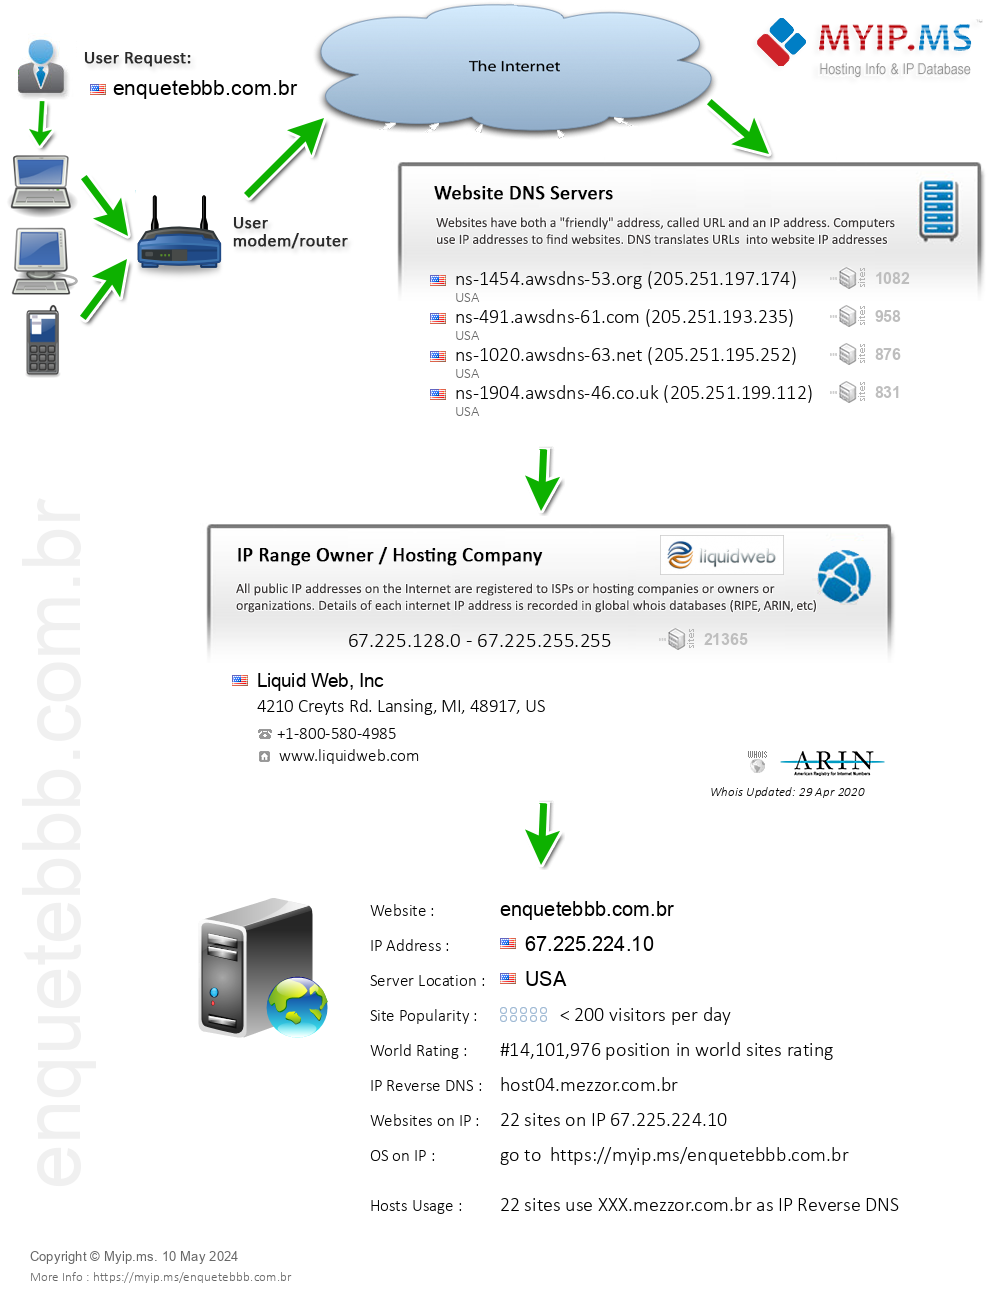 Enquetebbb.com.br - Website Hosting Visual IP Diagram